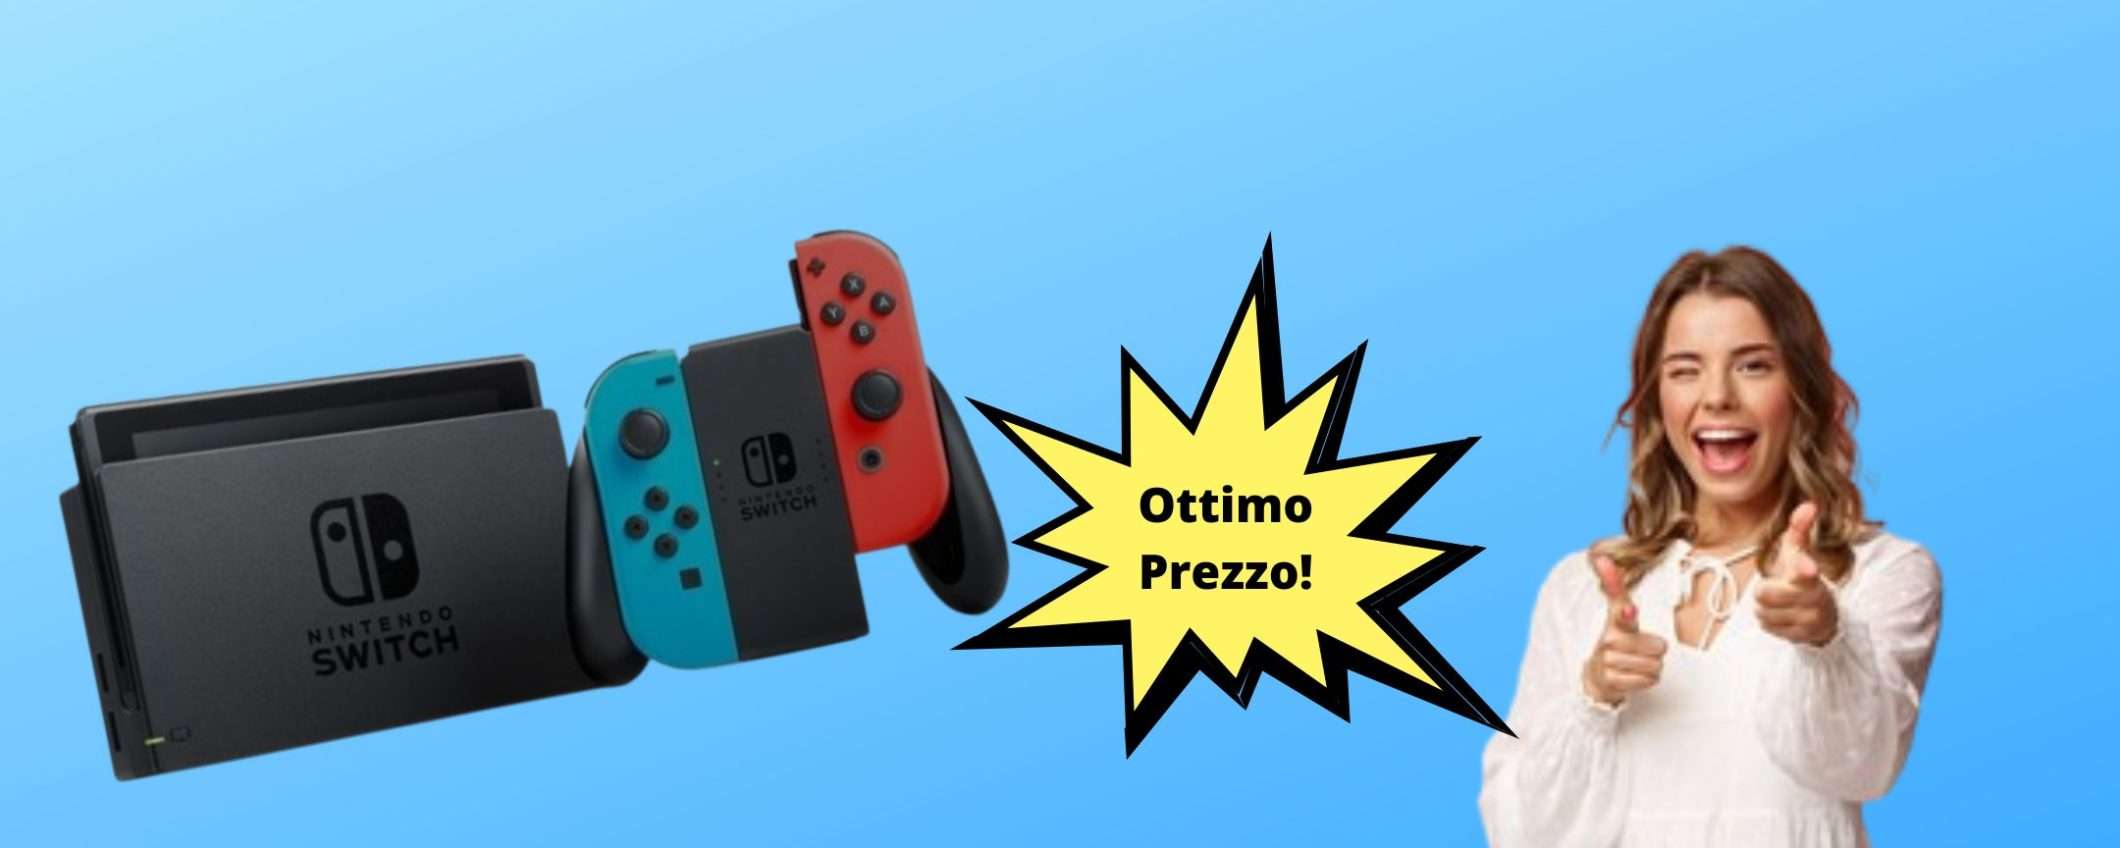 Nintendo Switch, acquistala ora con un GRANDE SCONTO su eBay